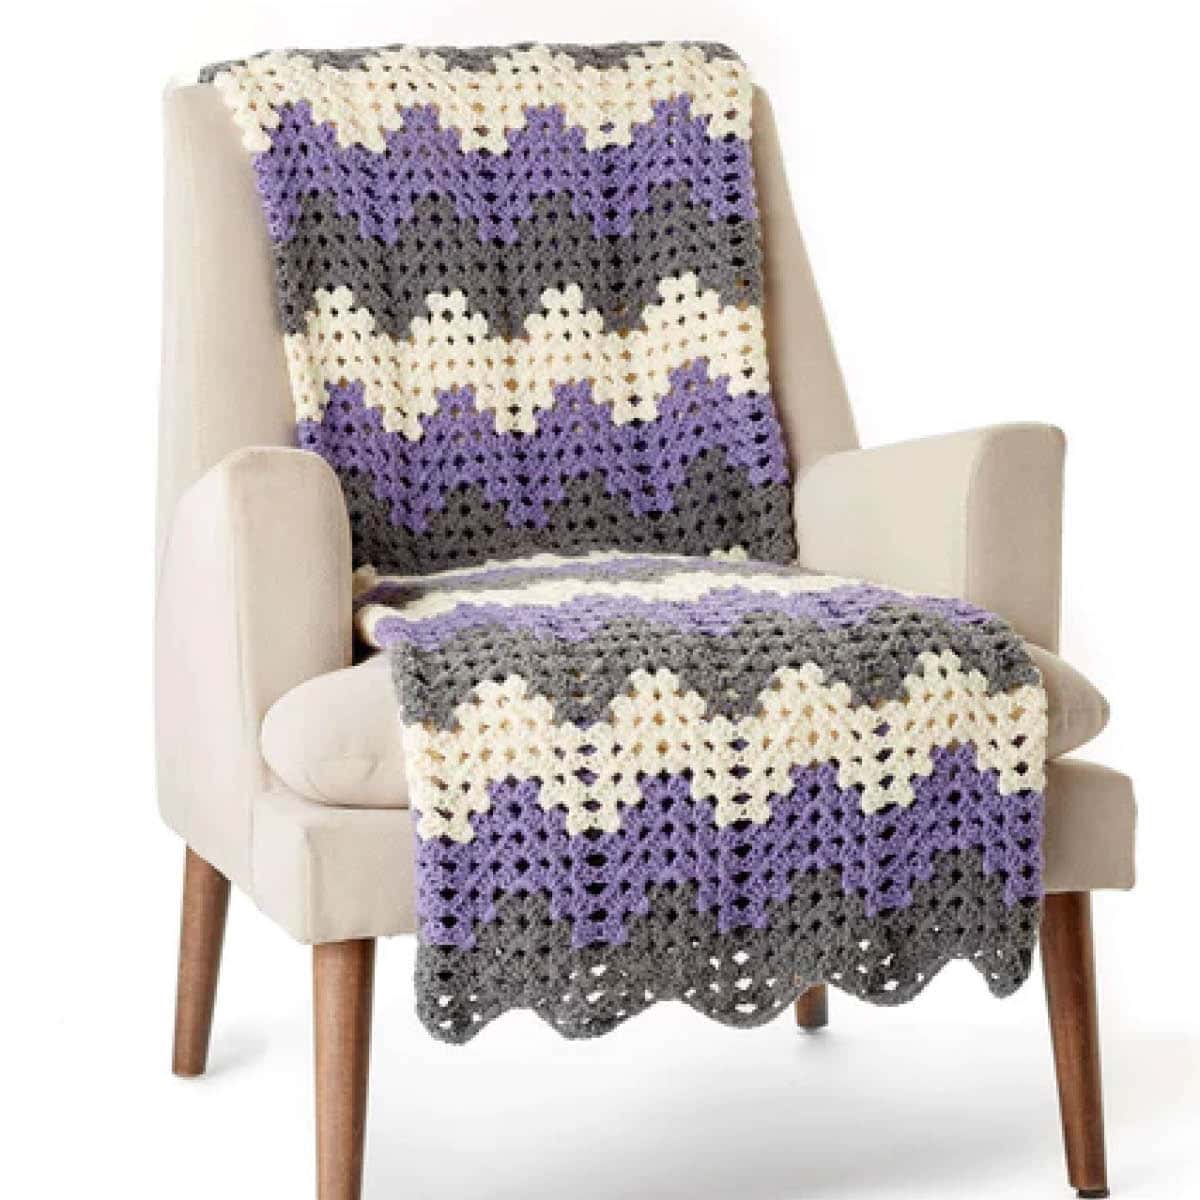 Crochet Granny Ripple Blanket Pattern